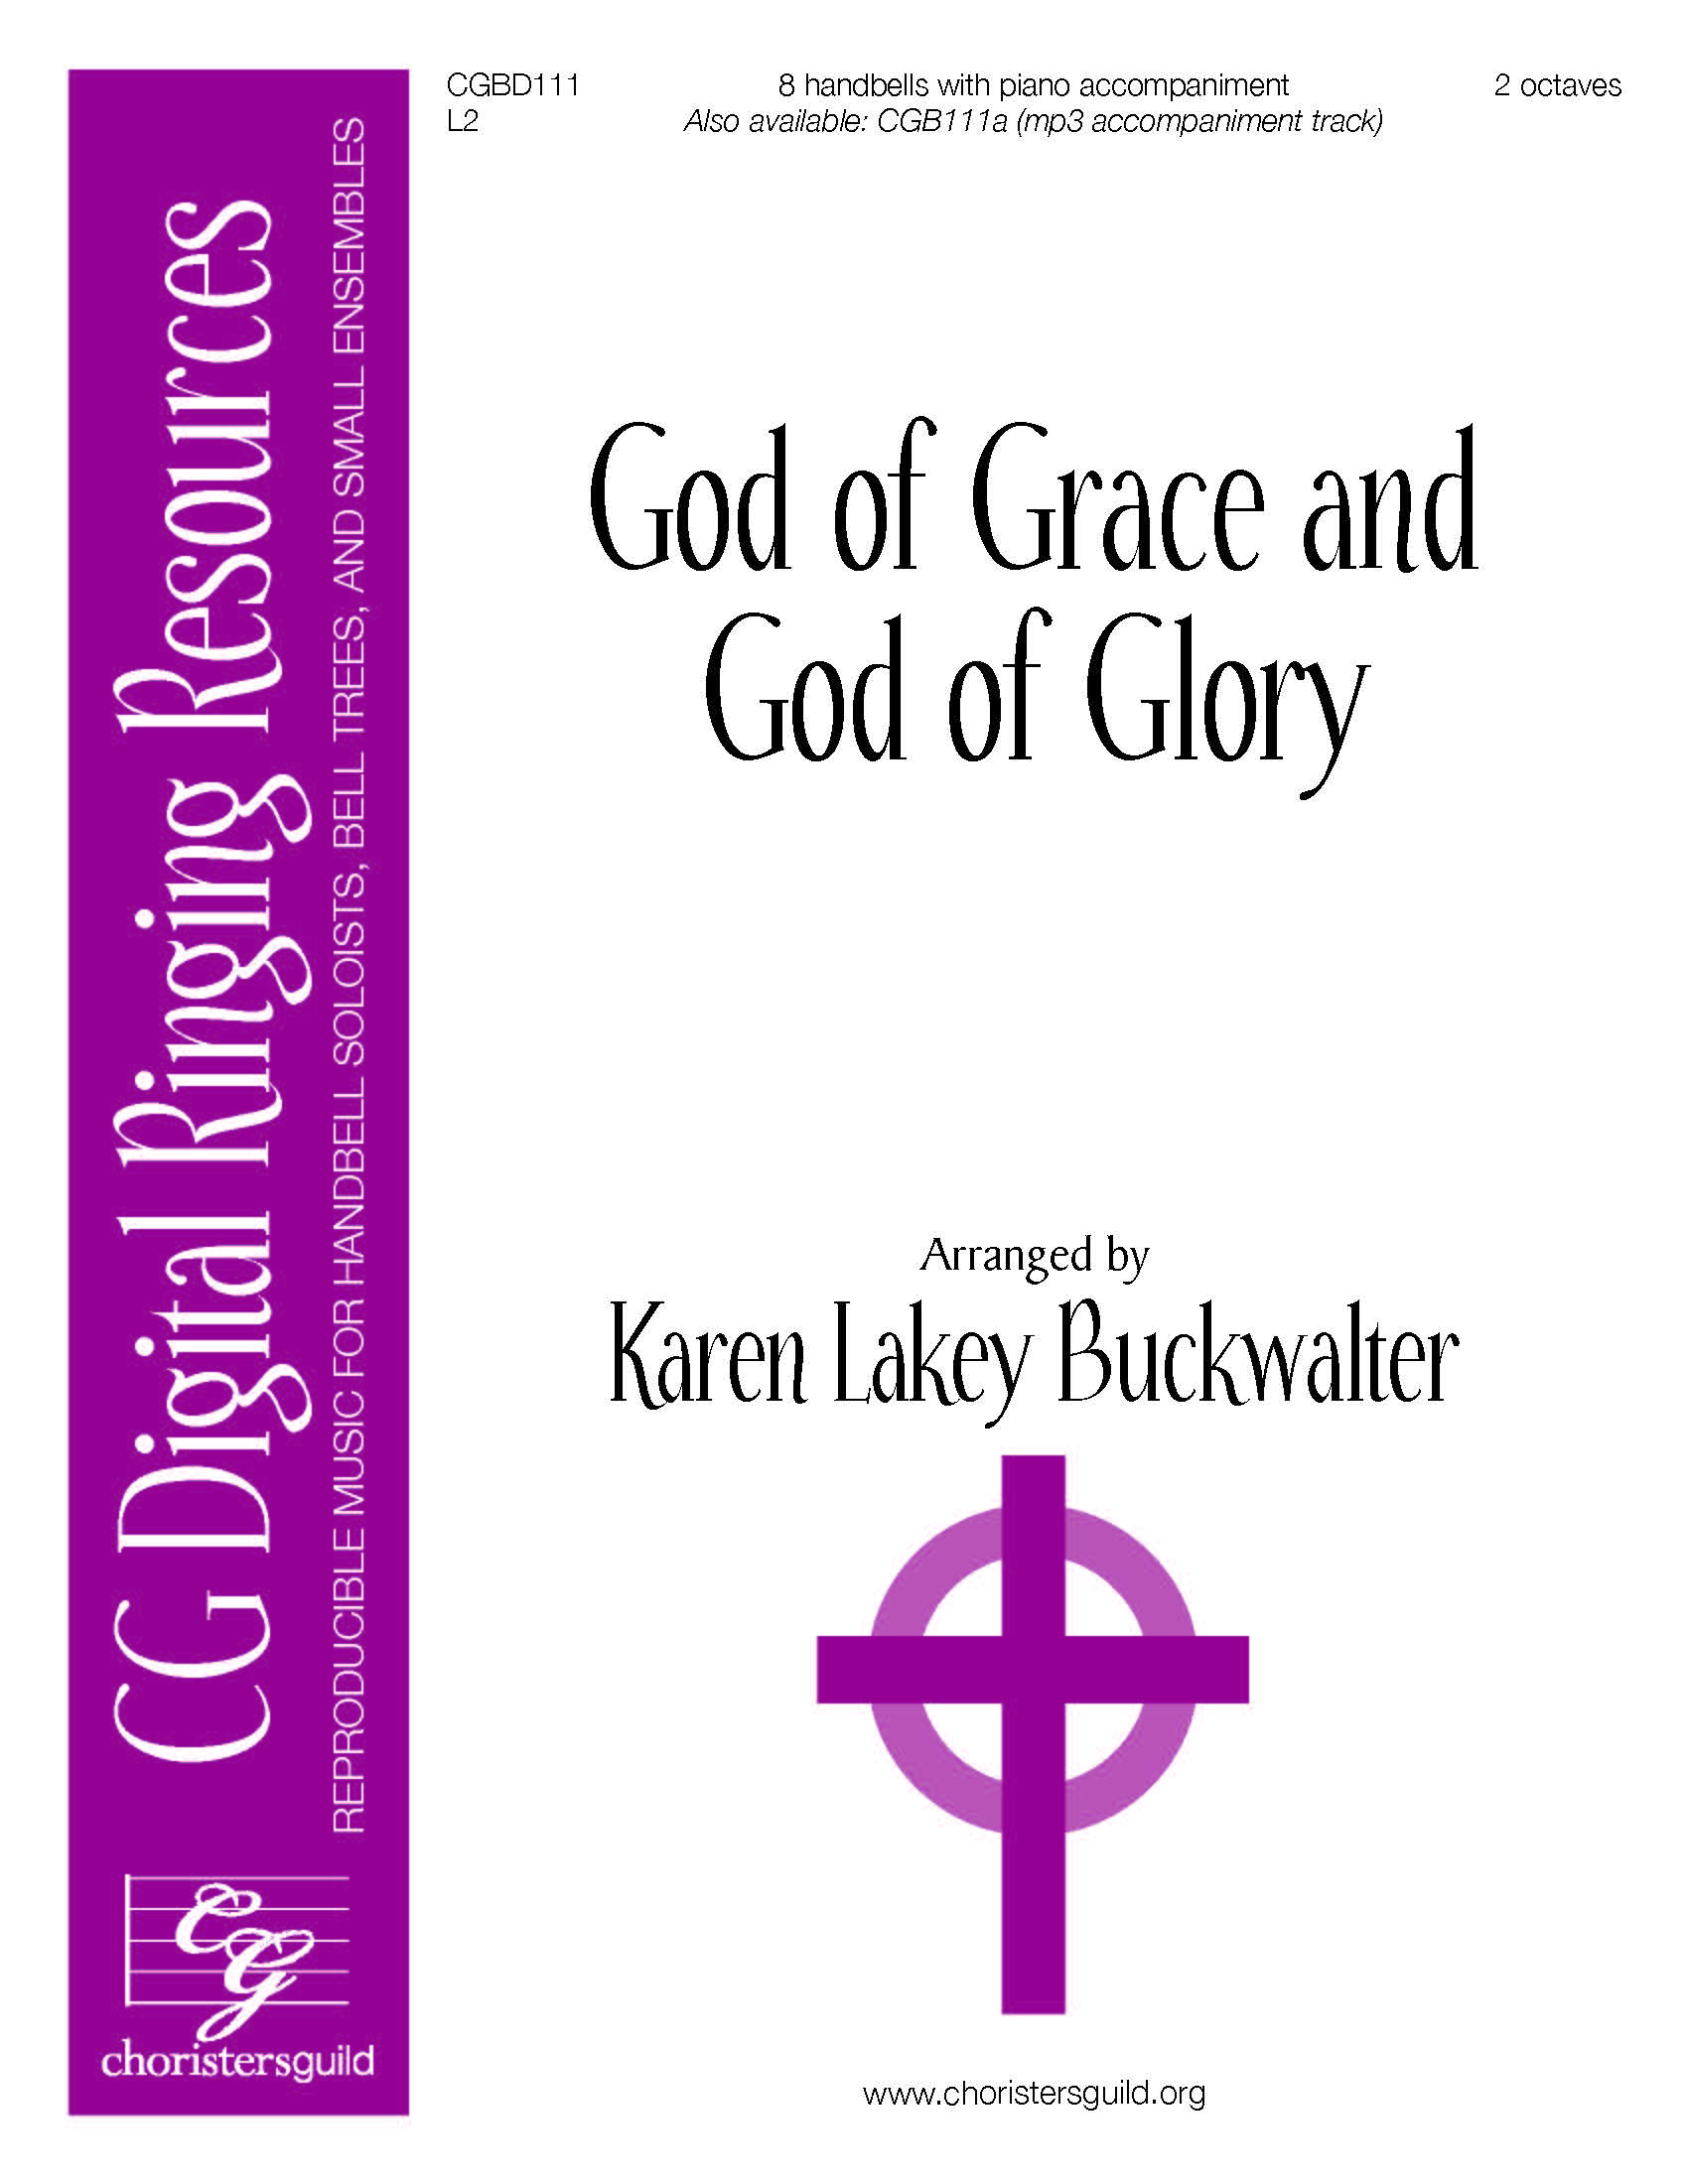 God of Grace and God of Glory - Digital Accompaniment Track